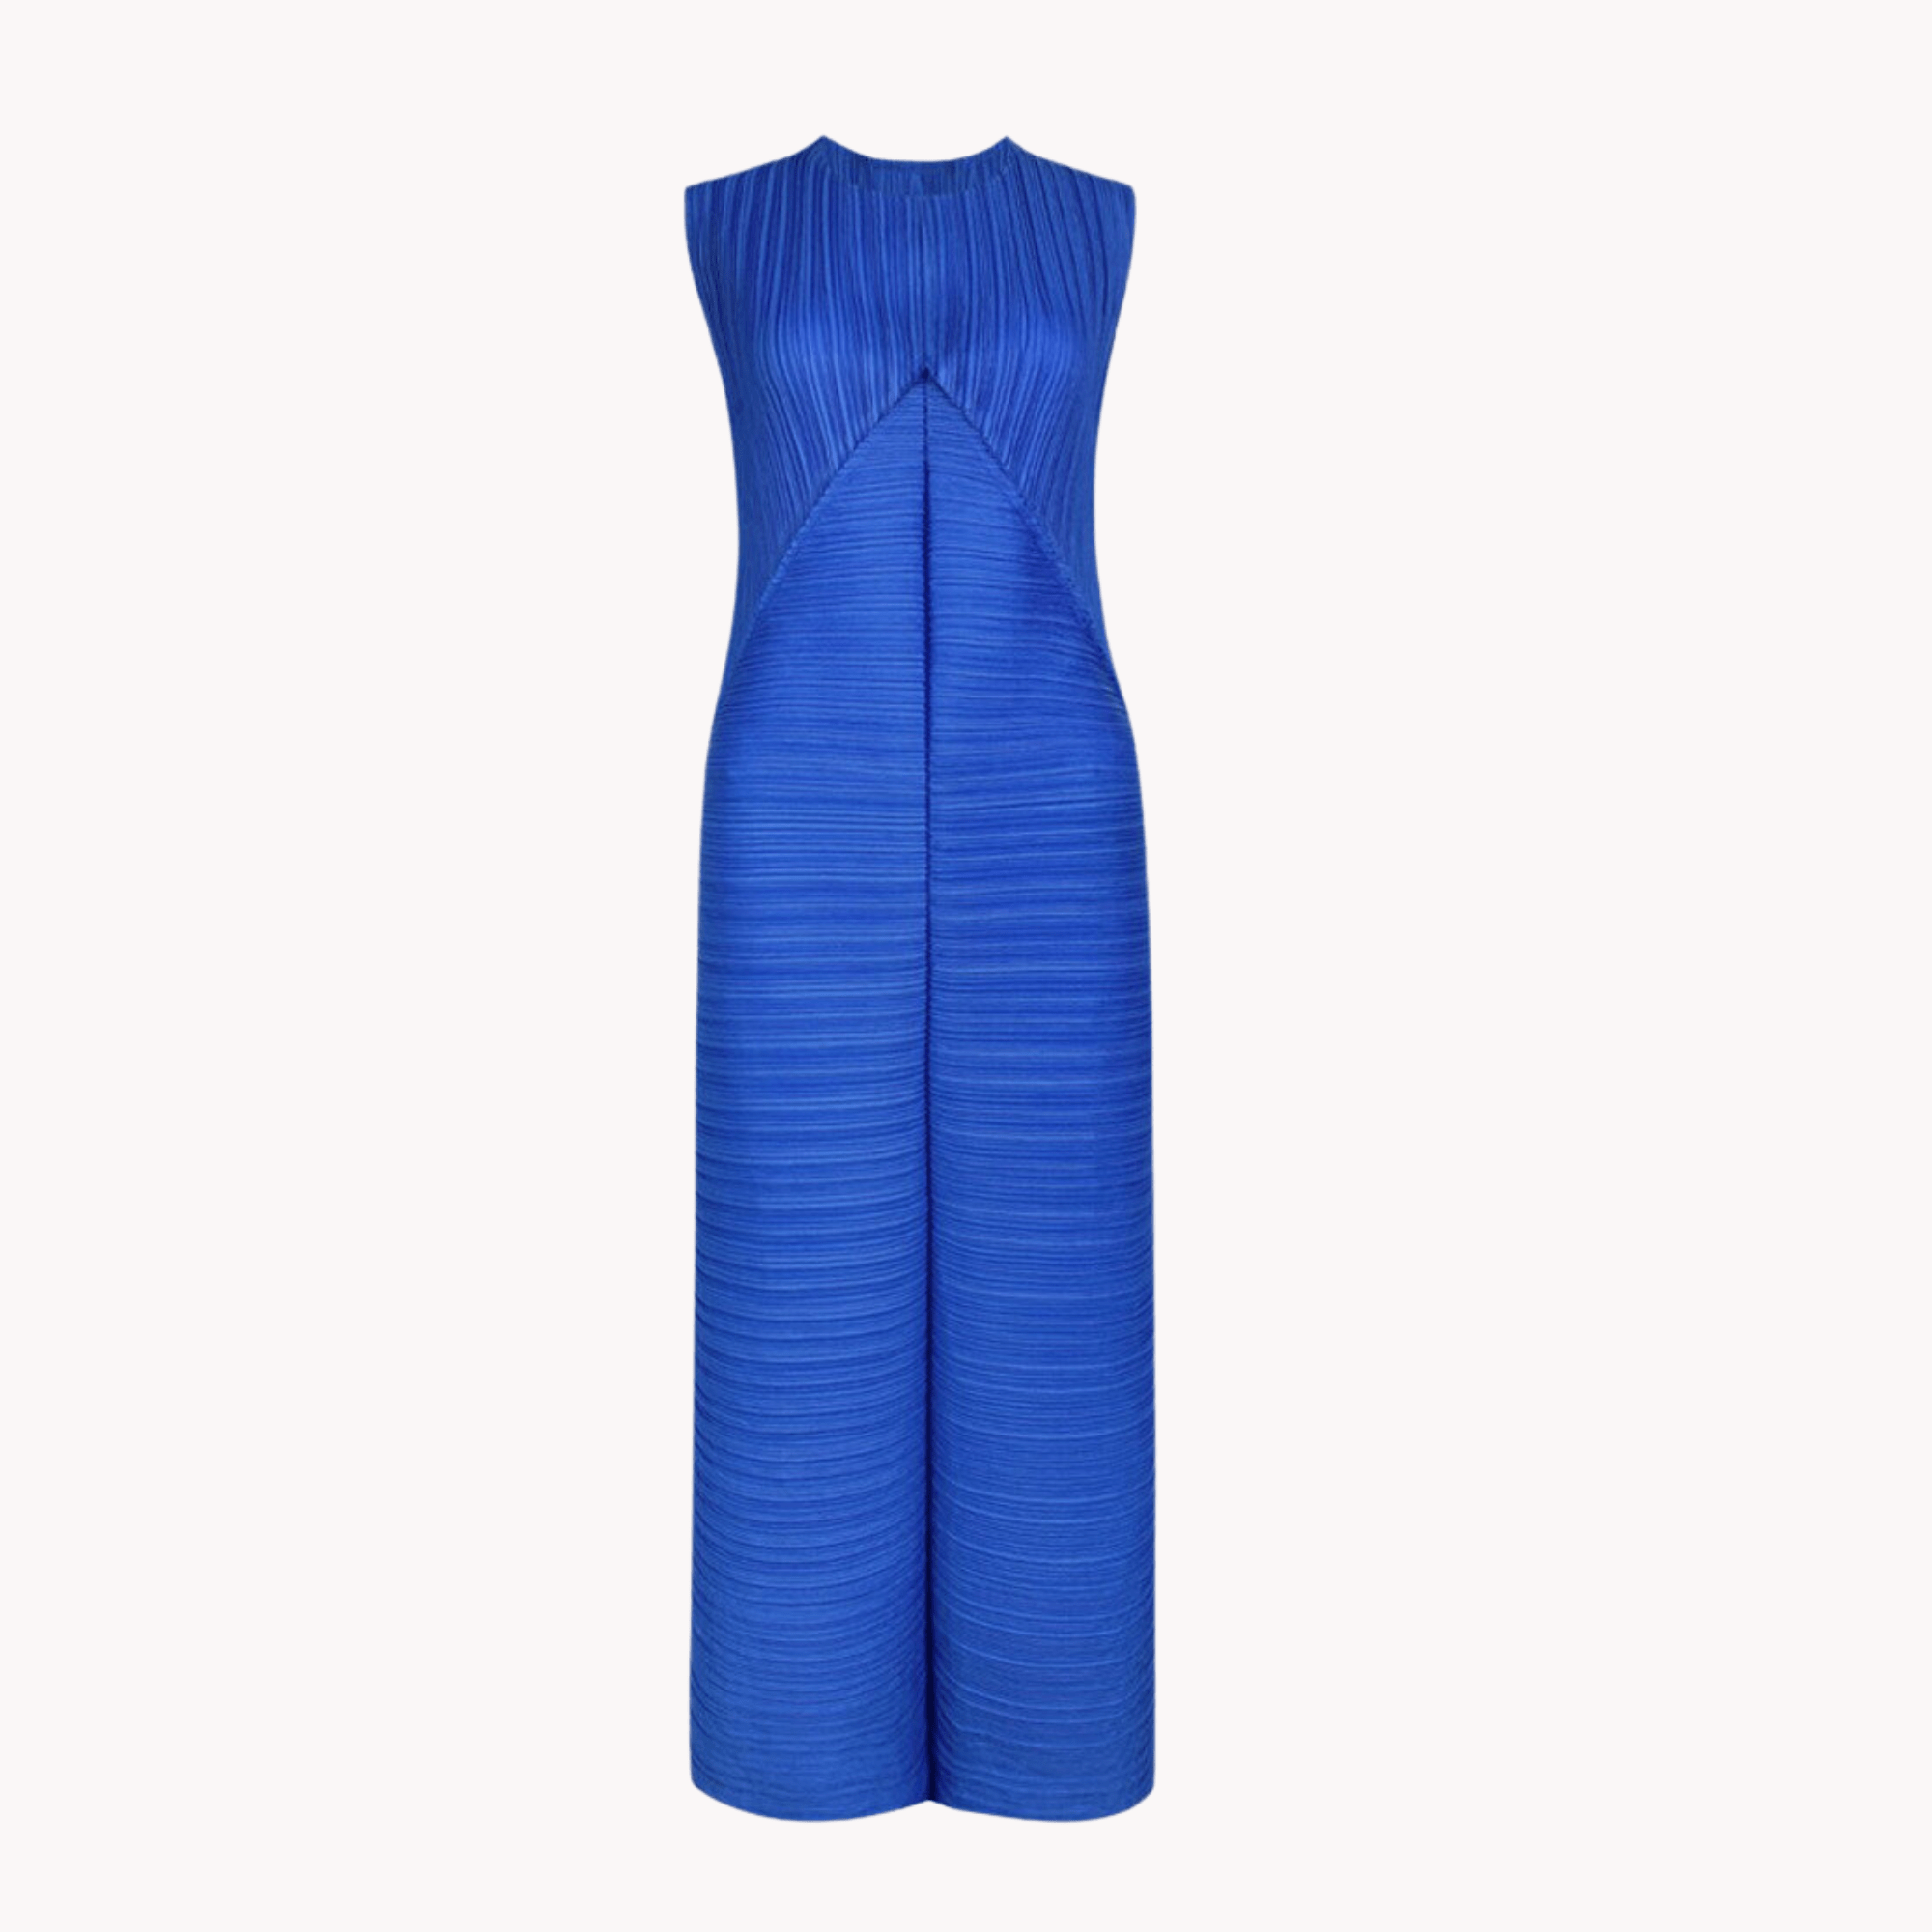 Solid Blue Pleated Dress - Kelly Obi New York